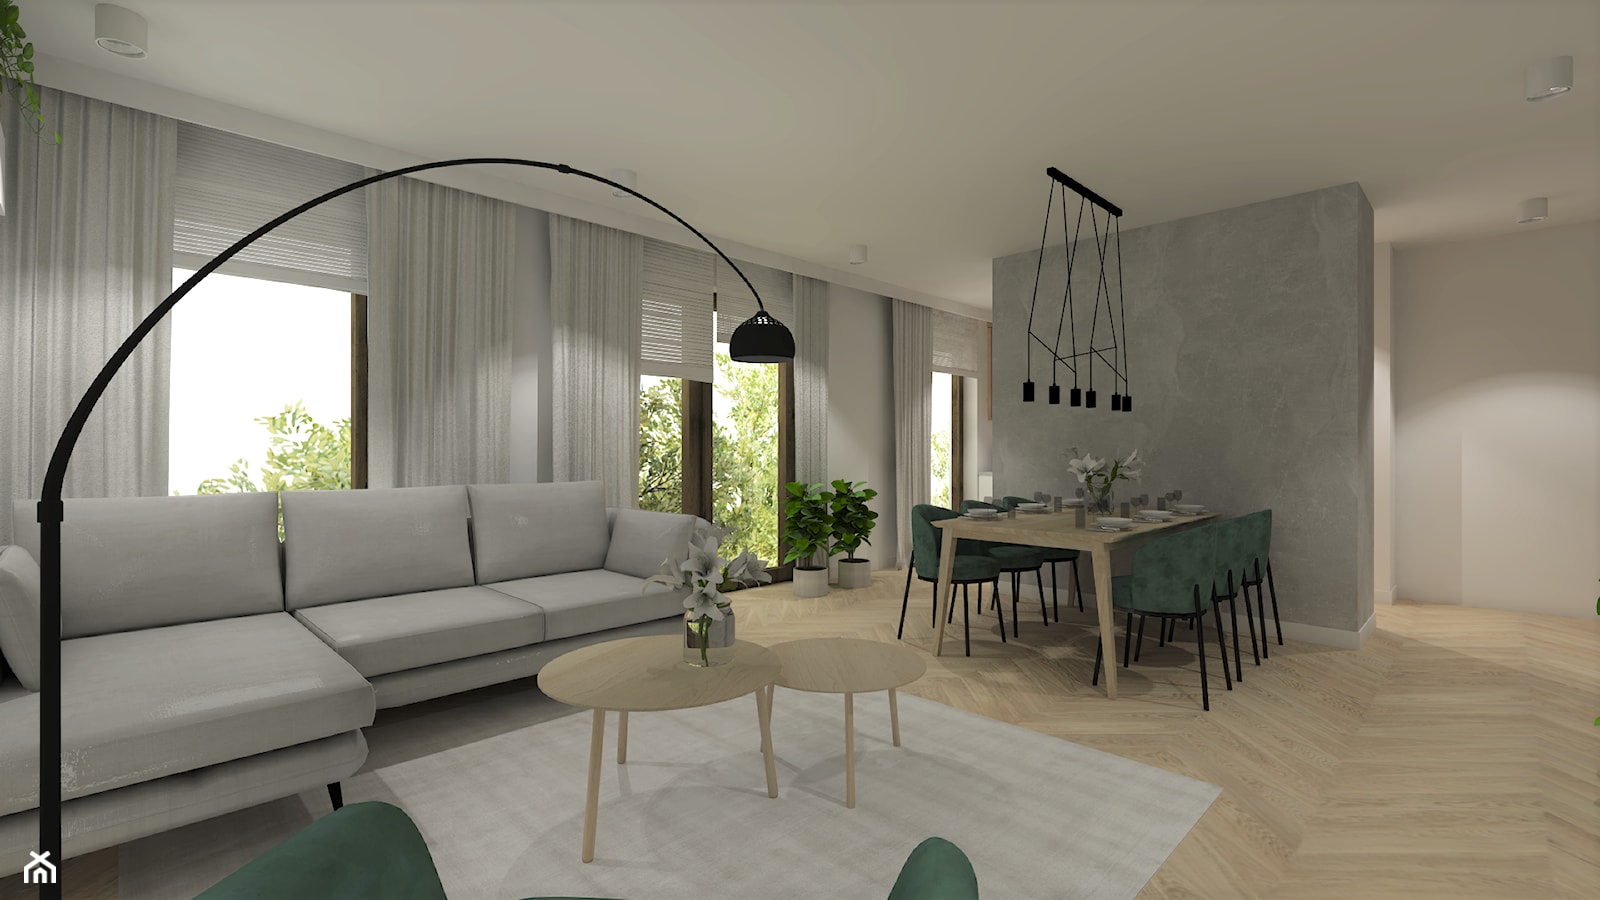 Projekt apartament Port Praski - Salon, styl skandynawski - zdjęcie od Gama Design - Homebook